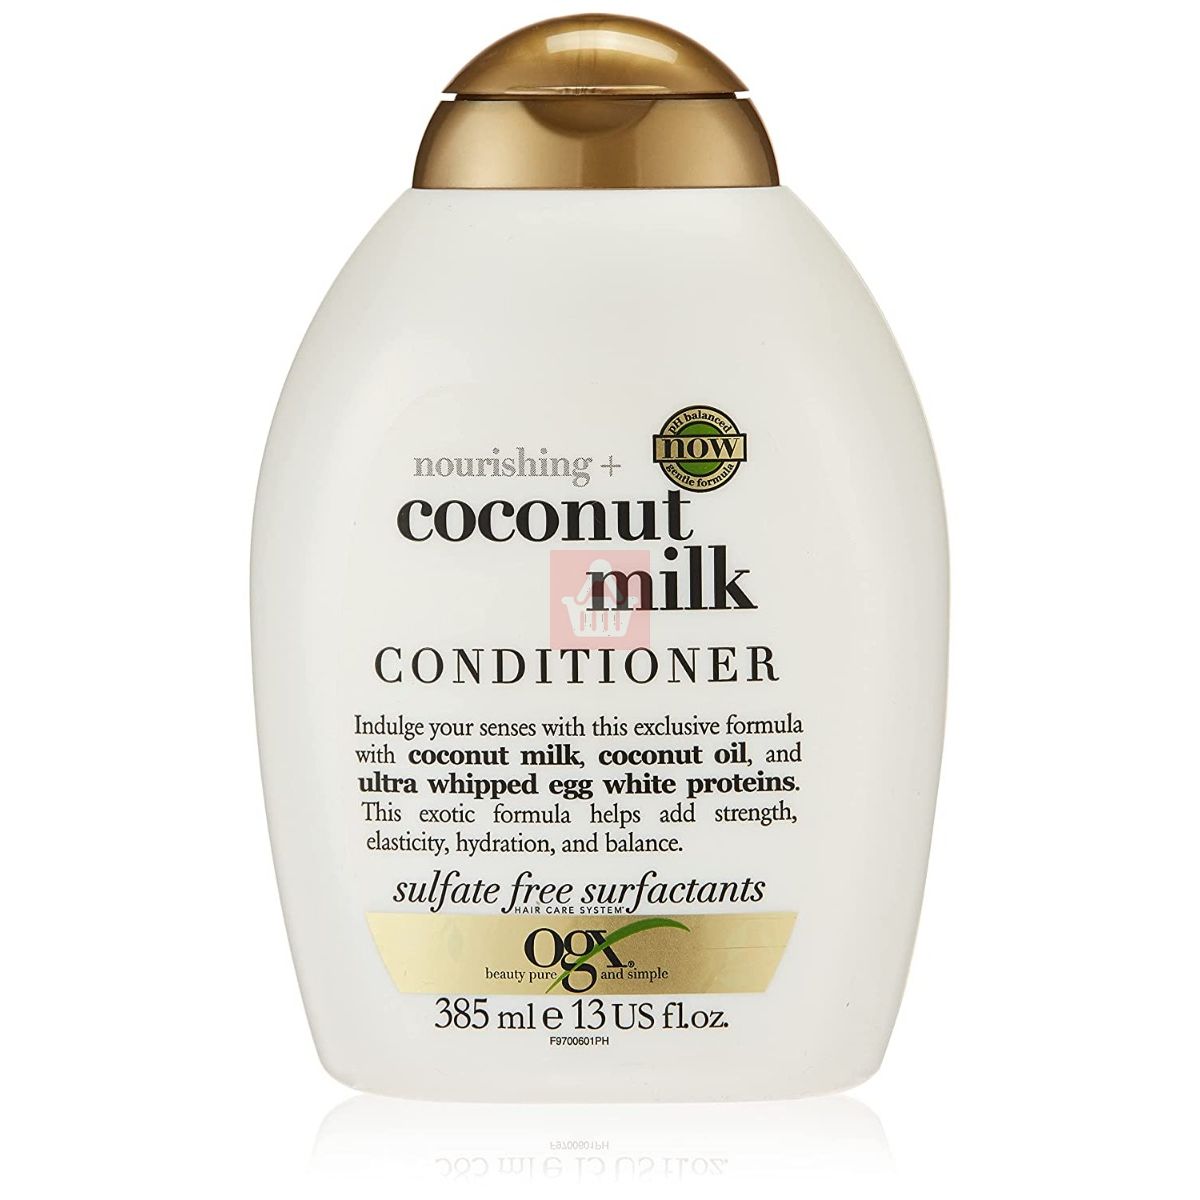 Ogx Nourishing Coconut Milk Conditioner